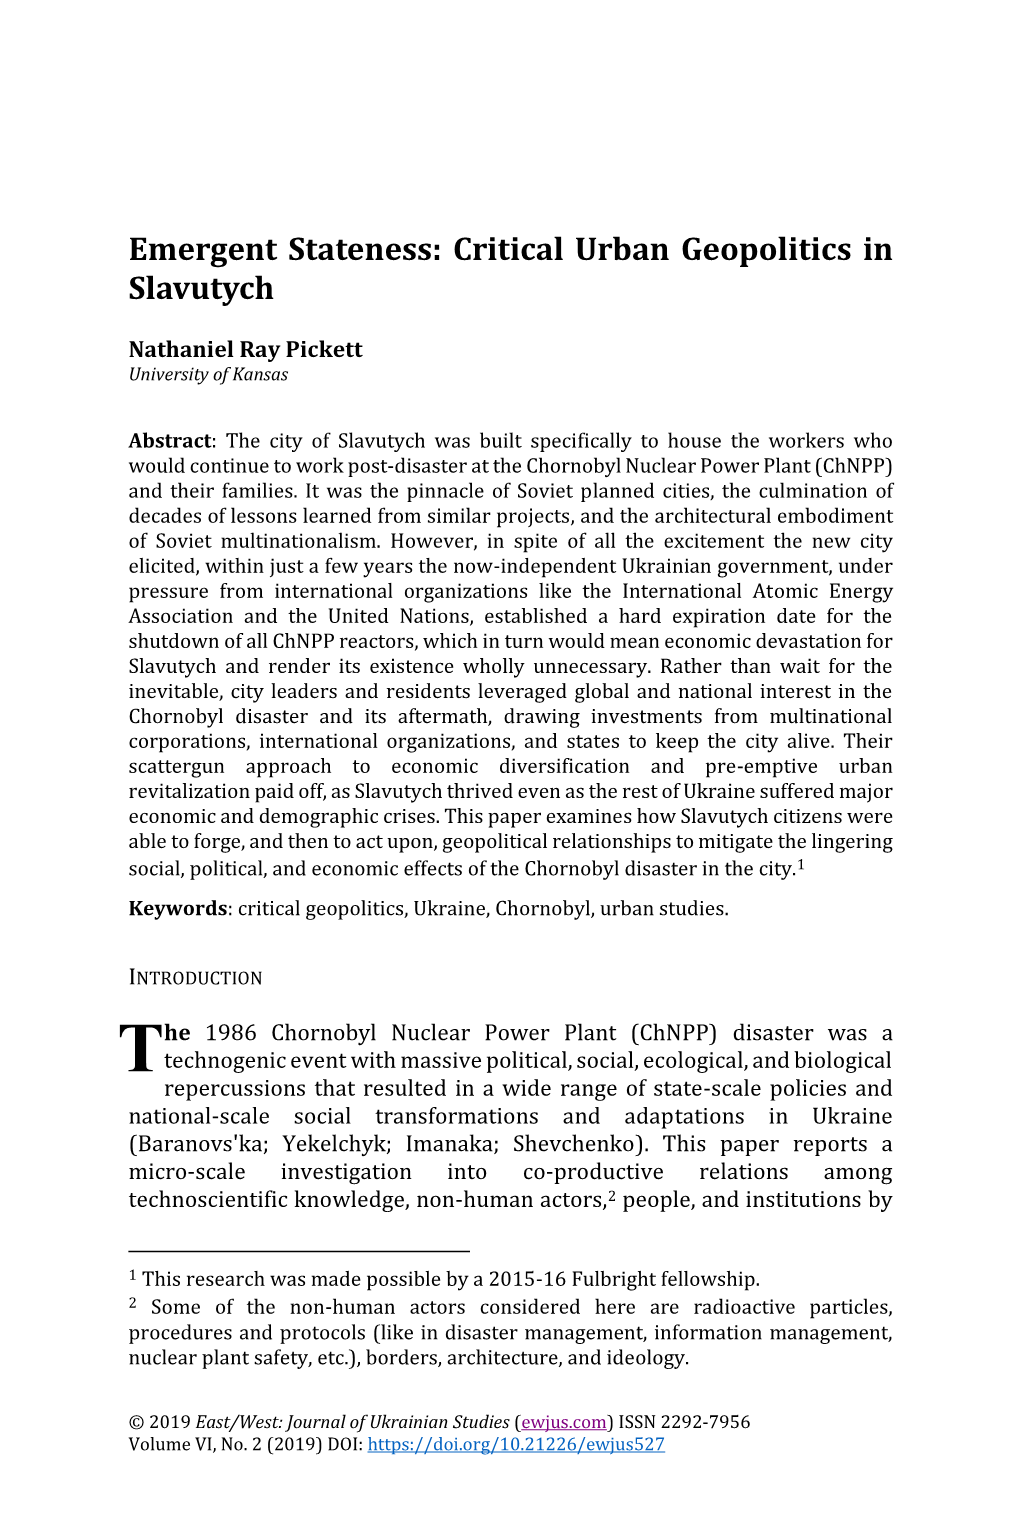 Emergent Stateness: Critical Urban Geopolitics in Slavutych, EWJUS